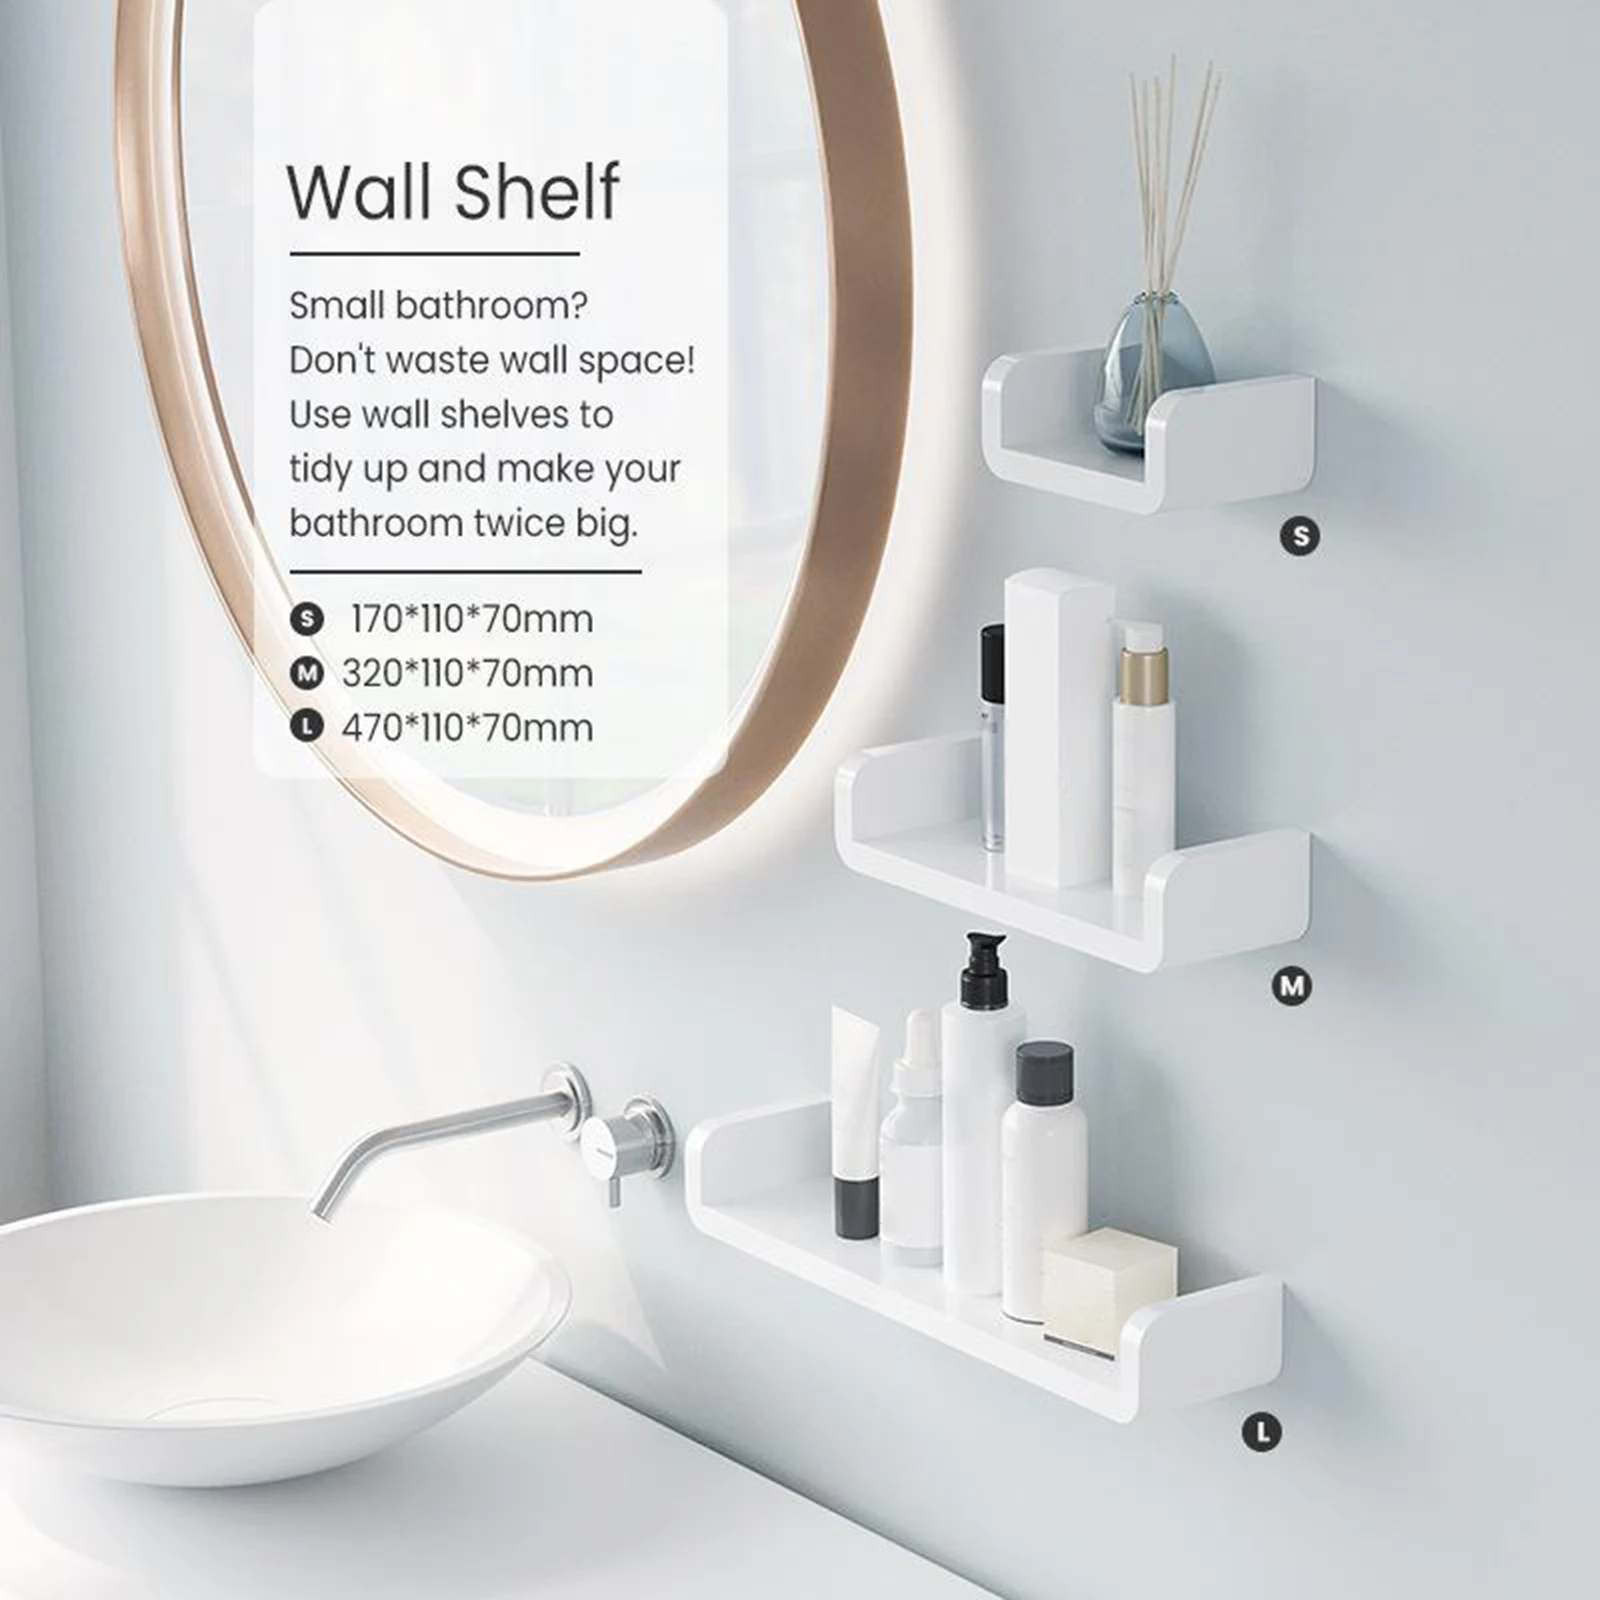 Dalanpa Floating Shelf Wall Mounted Non-Drilling Adhesive Bathroom Organizer Ledge Shelf for Home Decor